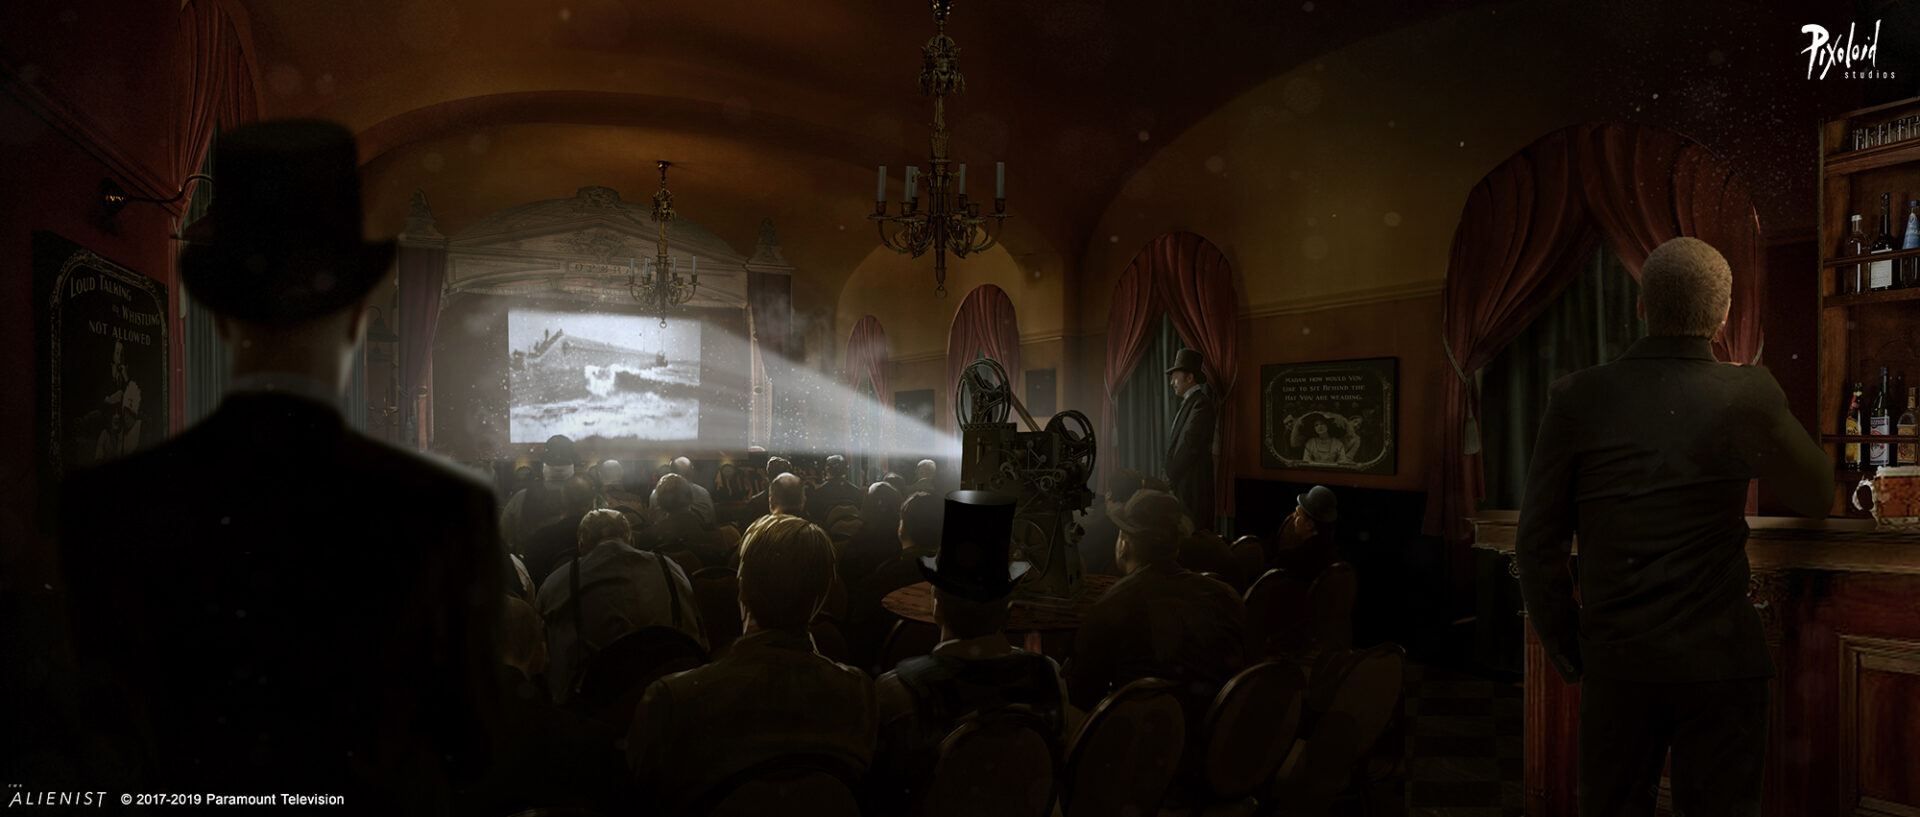 Brubacher's movie theatre - 1800s cinema - location and keyframe concept for The Alienist